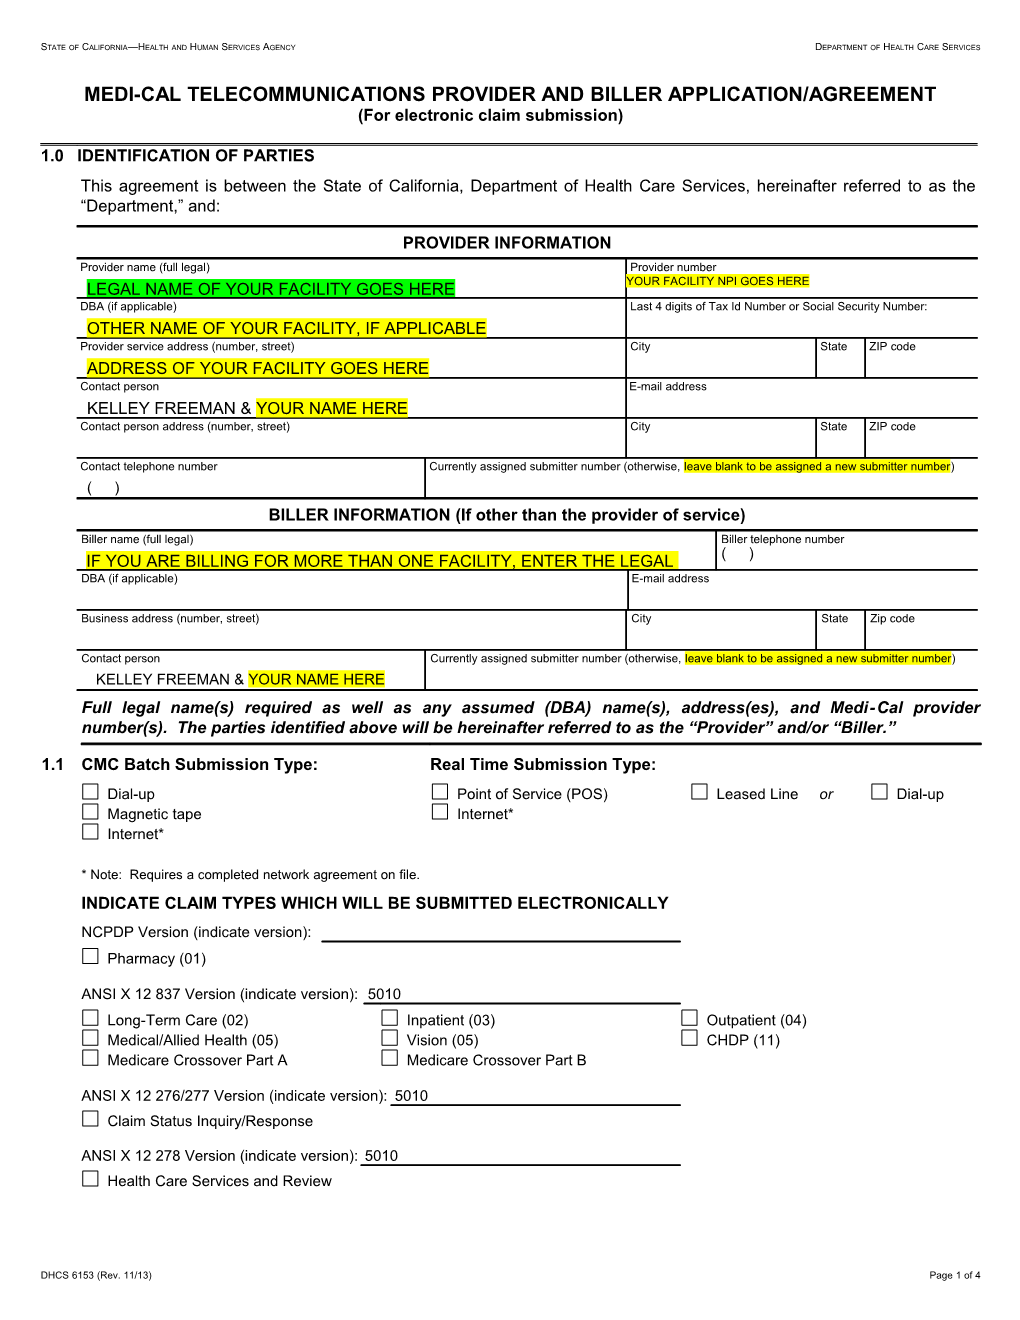 Form: Medi-Cal Telecommunications Provider and Biller Application/Agreement (Cmcenrollform6153)